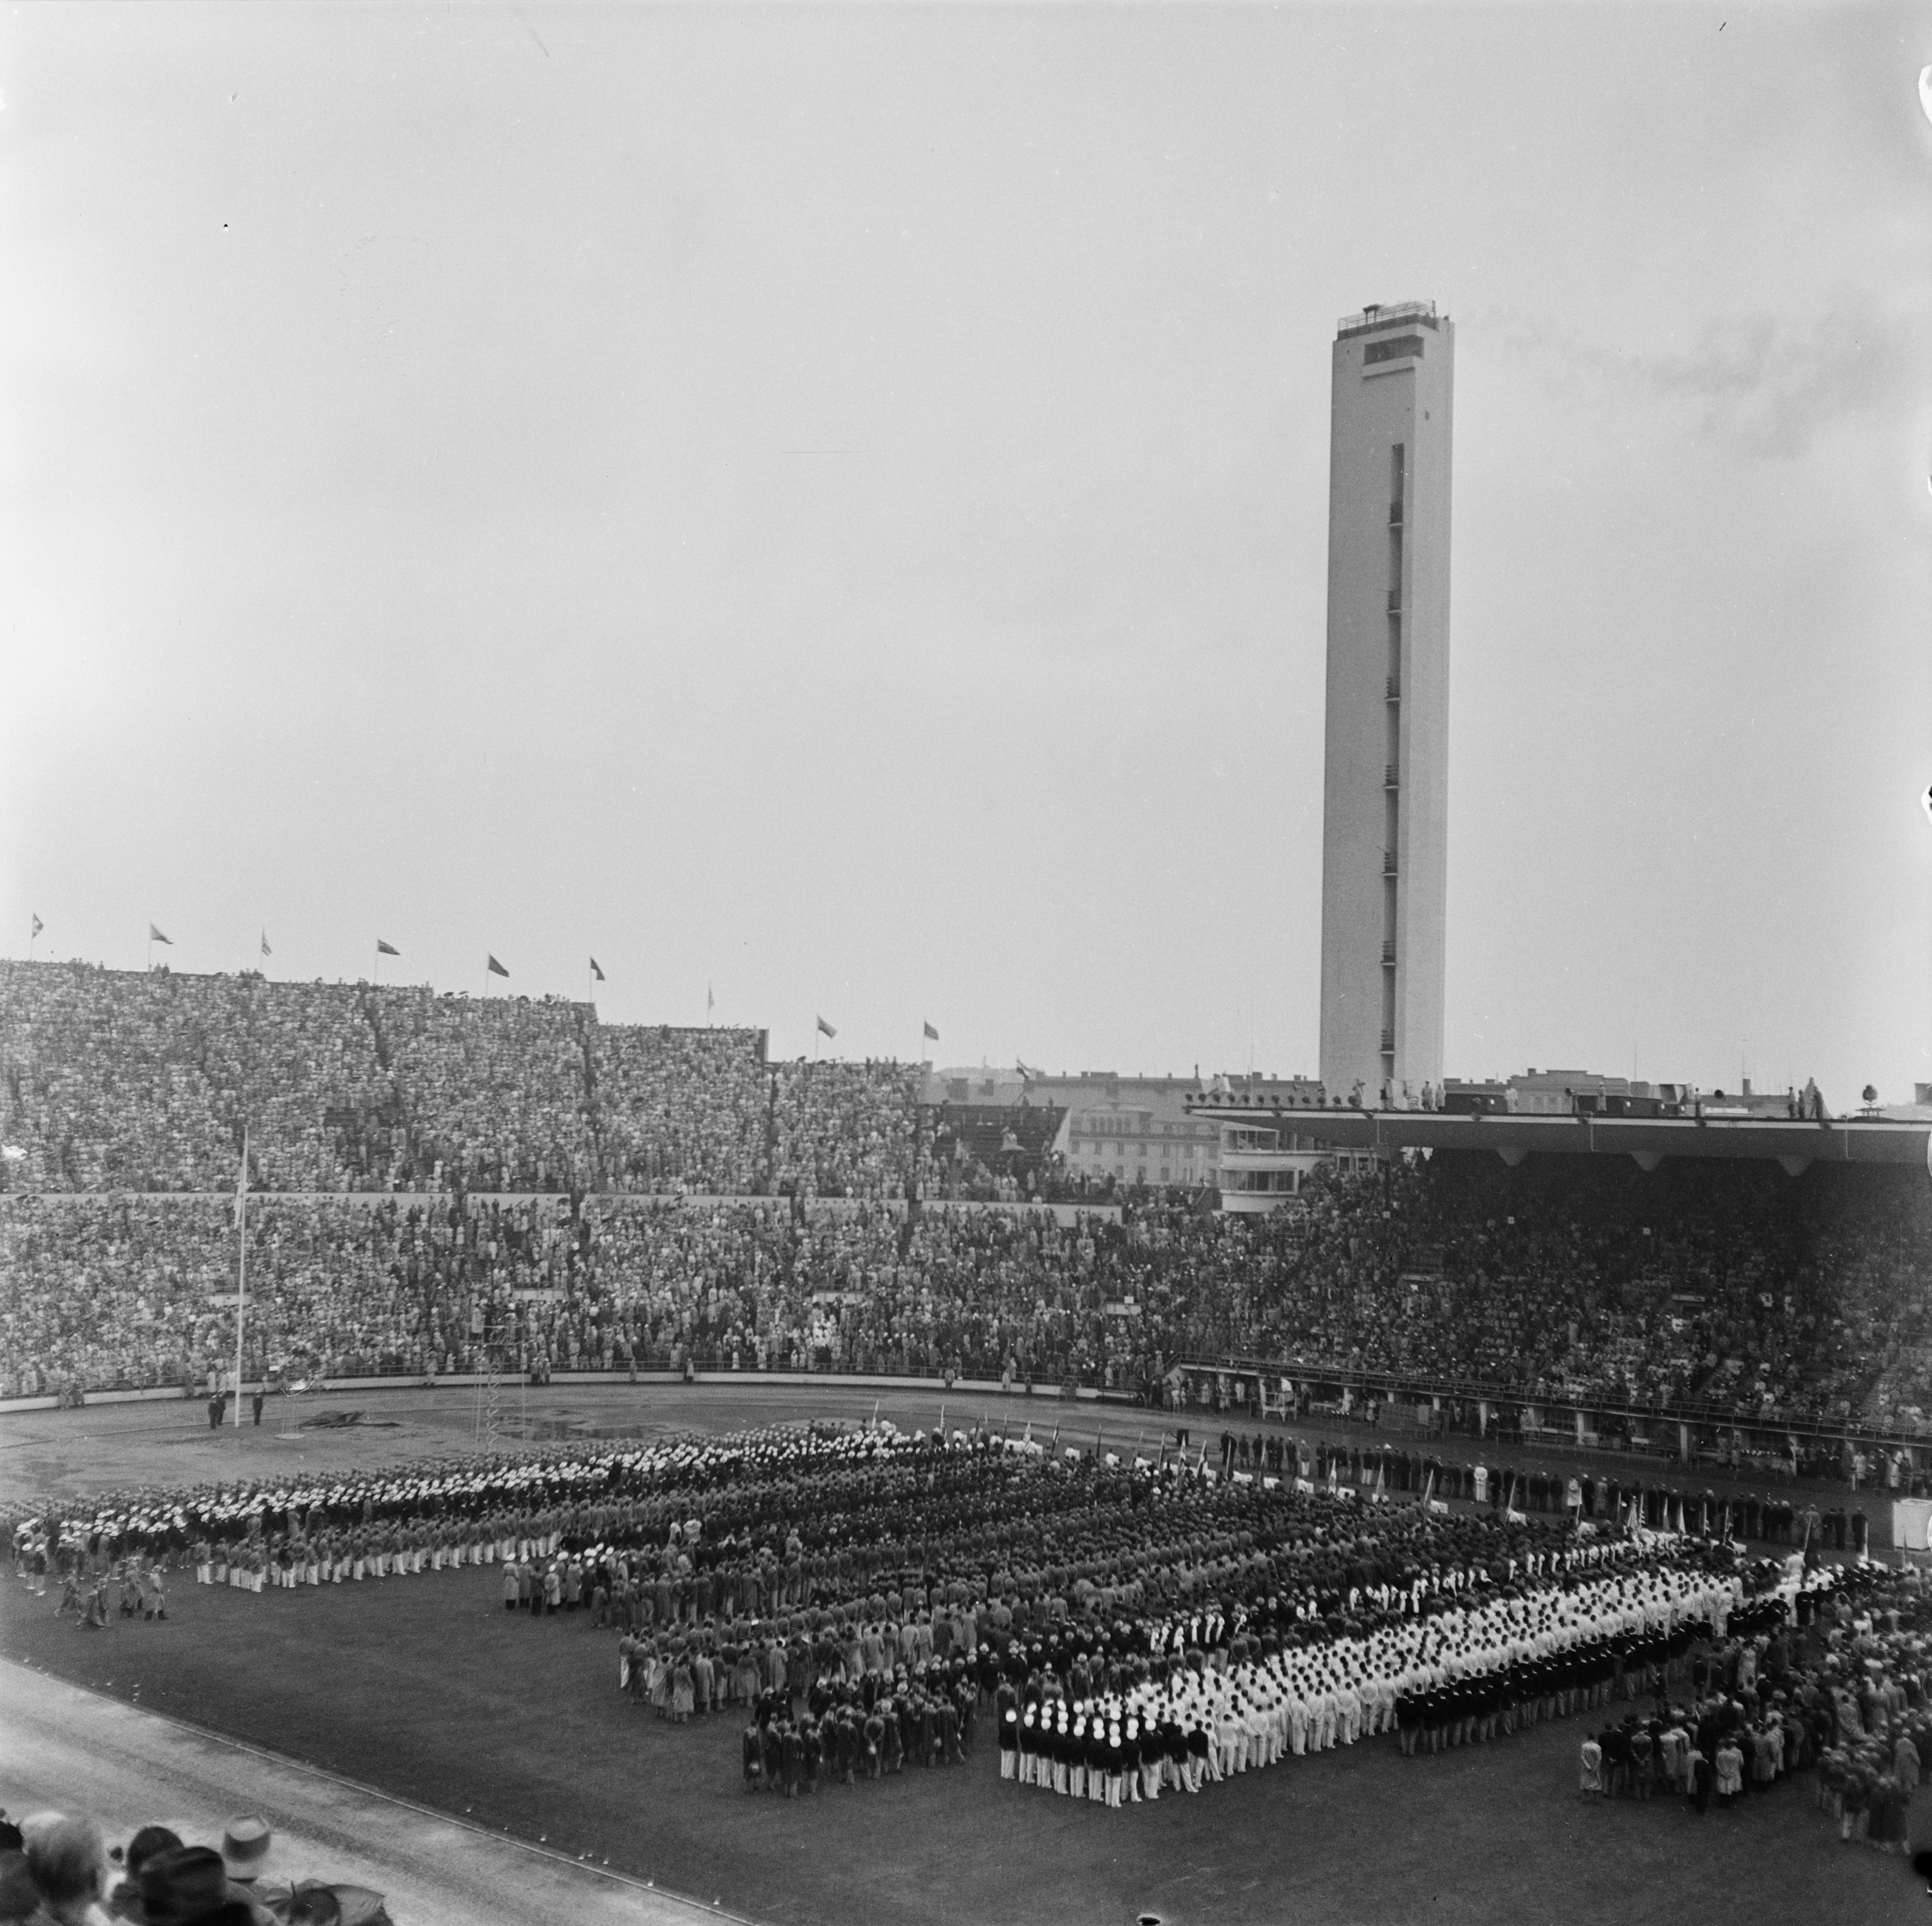 File:Helsingin olympialaiset 1952 - N210122  -  Wikimedia Commons